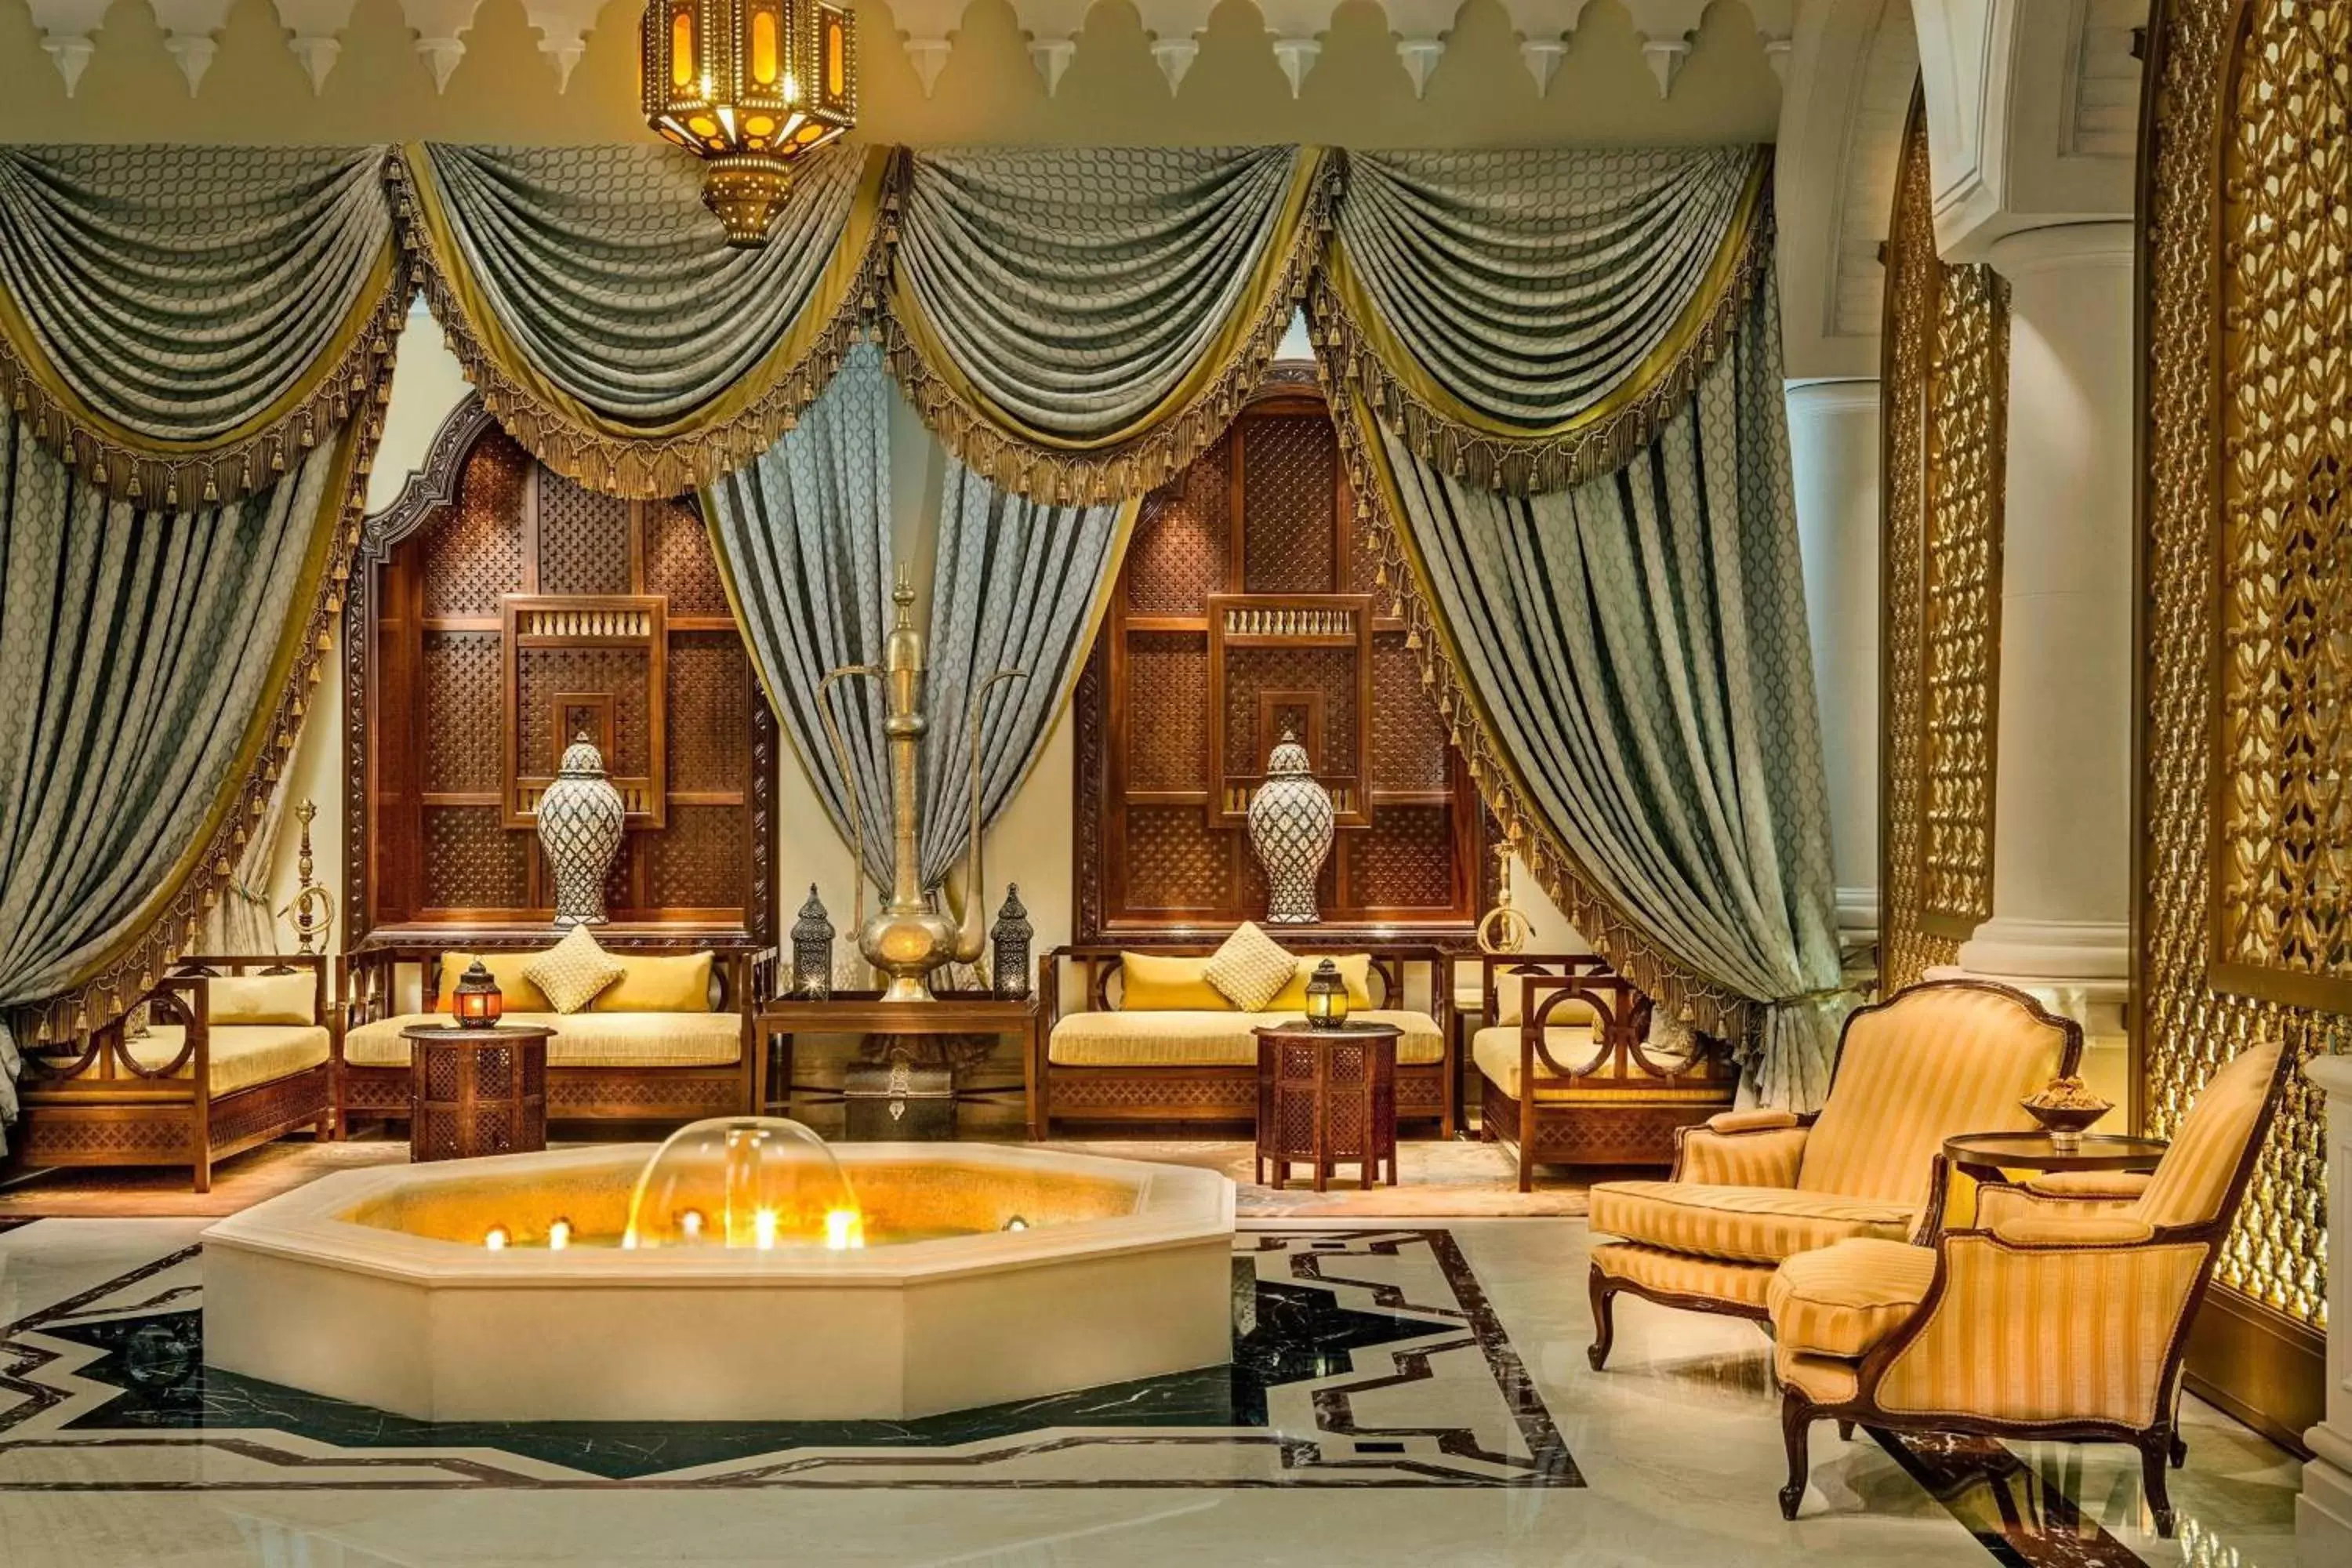 Lobby or reception in The Ritz-Carlton, Dubai